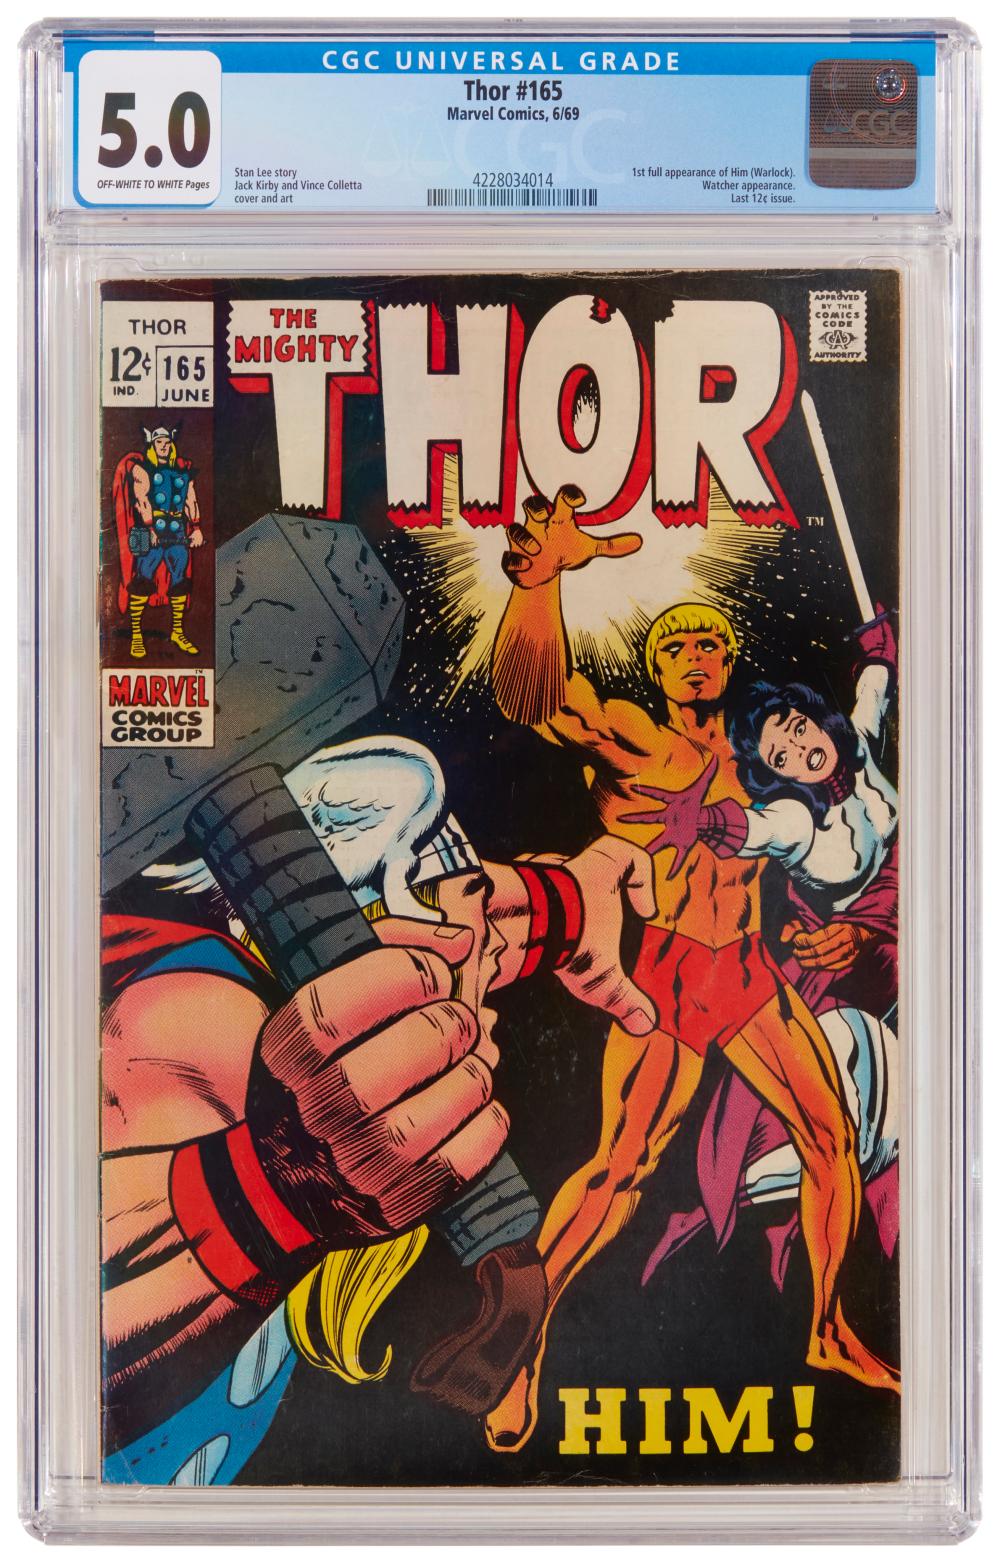 THOR #165 (MARVEL COMICS, 1969)Thor